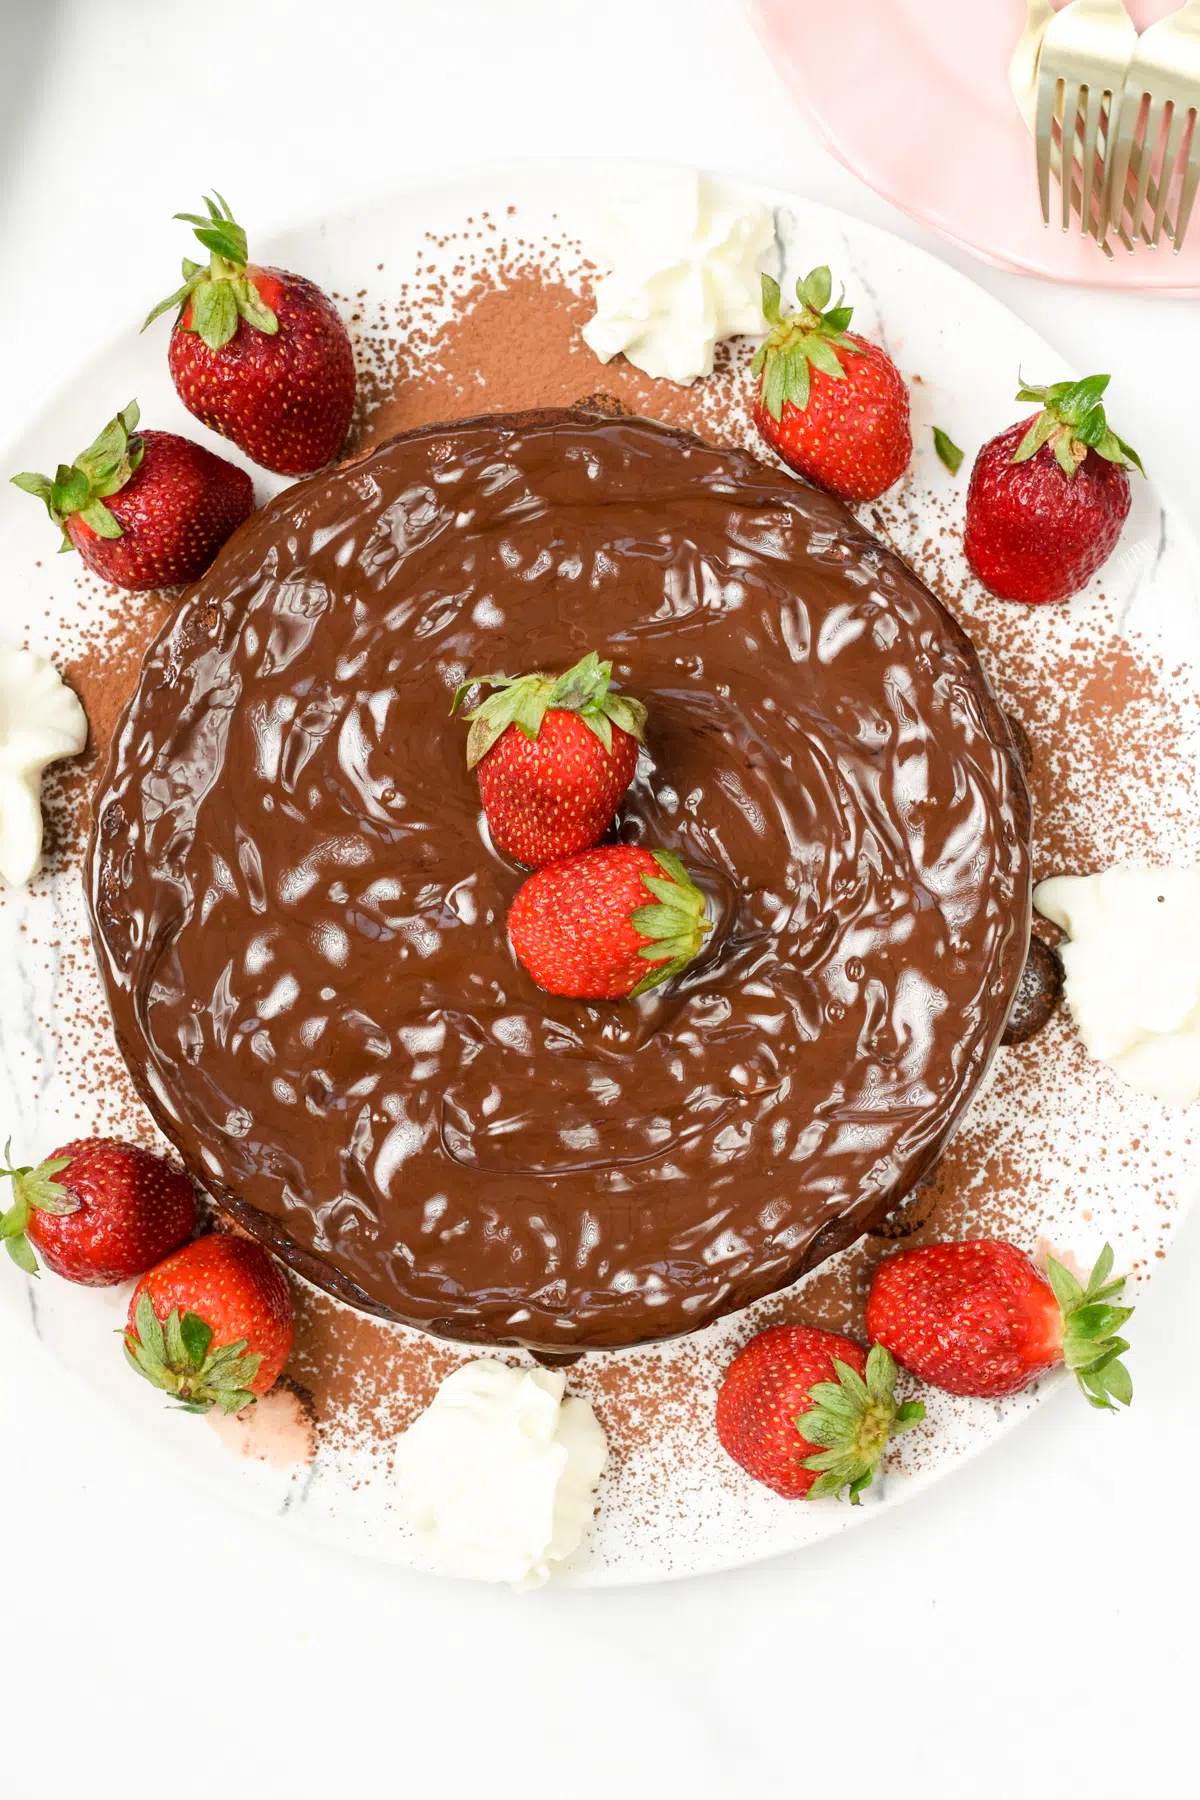 2 ingredients Chocolate Cake flourless chocolate cake gluten free dairy free paleo